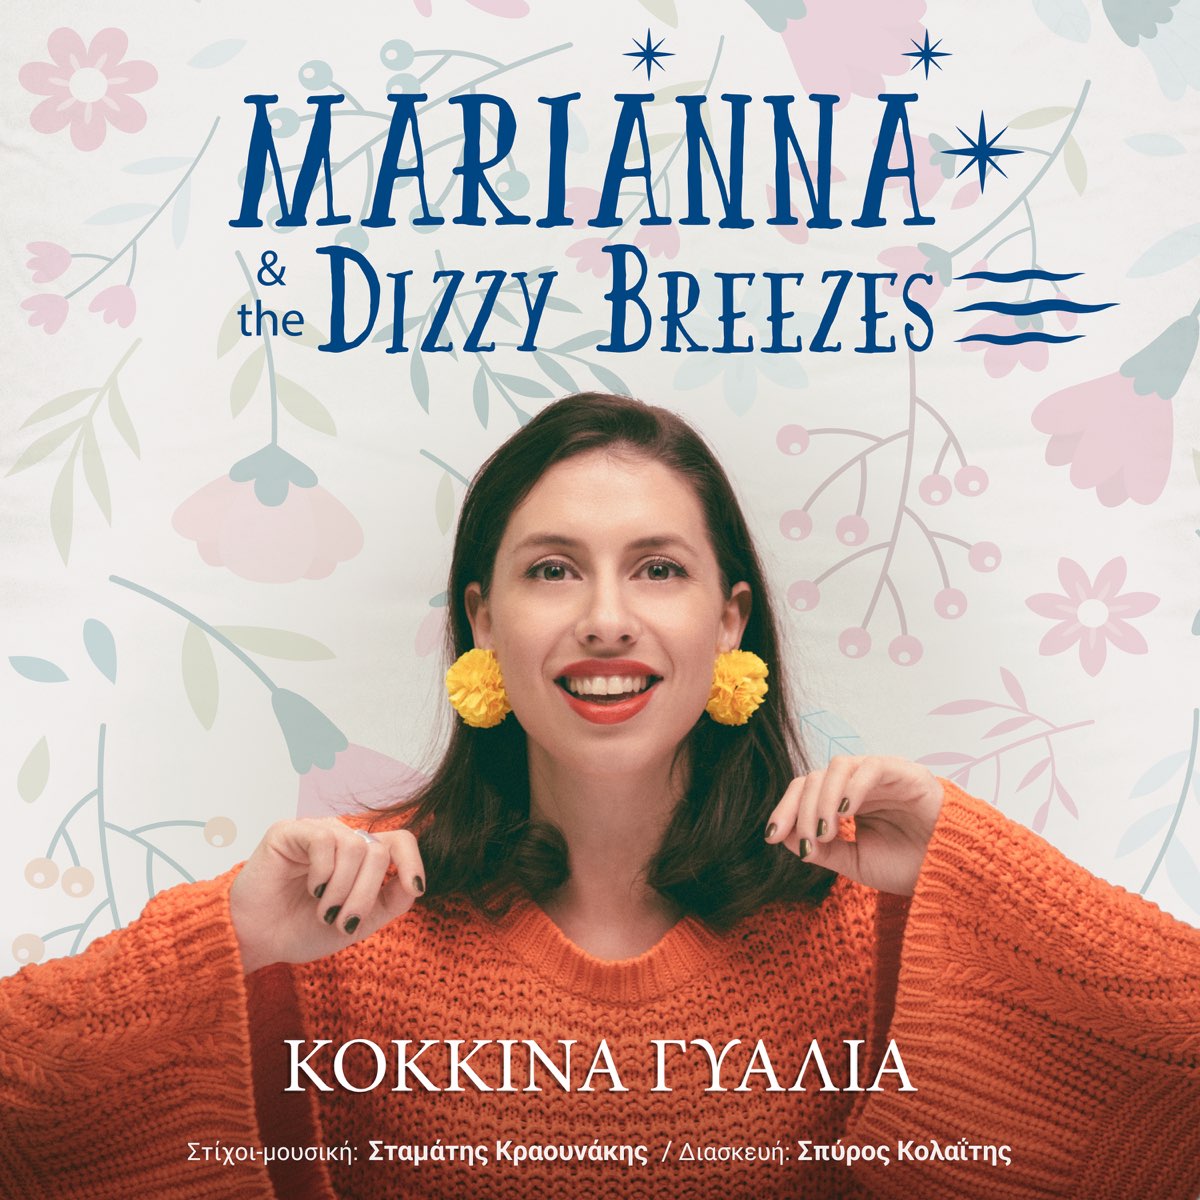 Kokkina Gialia - Single - Album by Marianna Papathanasiou & the Dizzy  Breezes - Apple Music